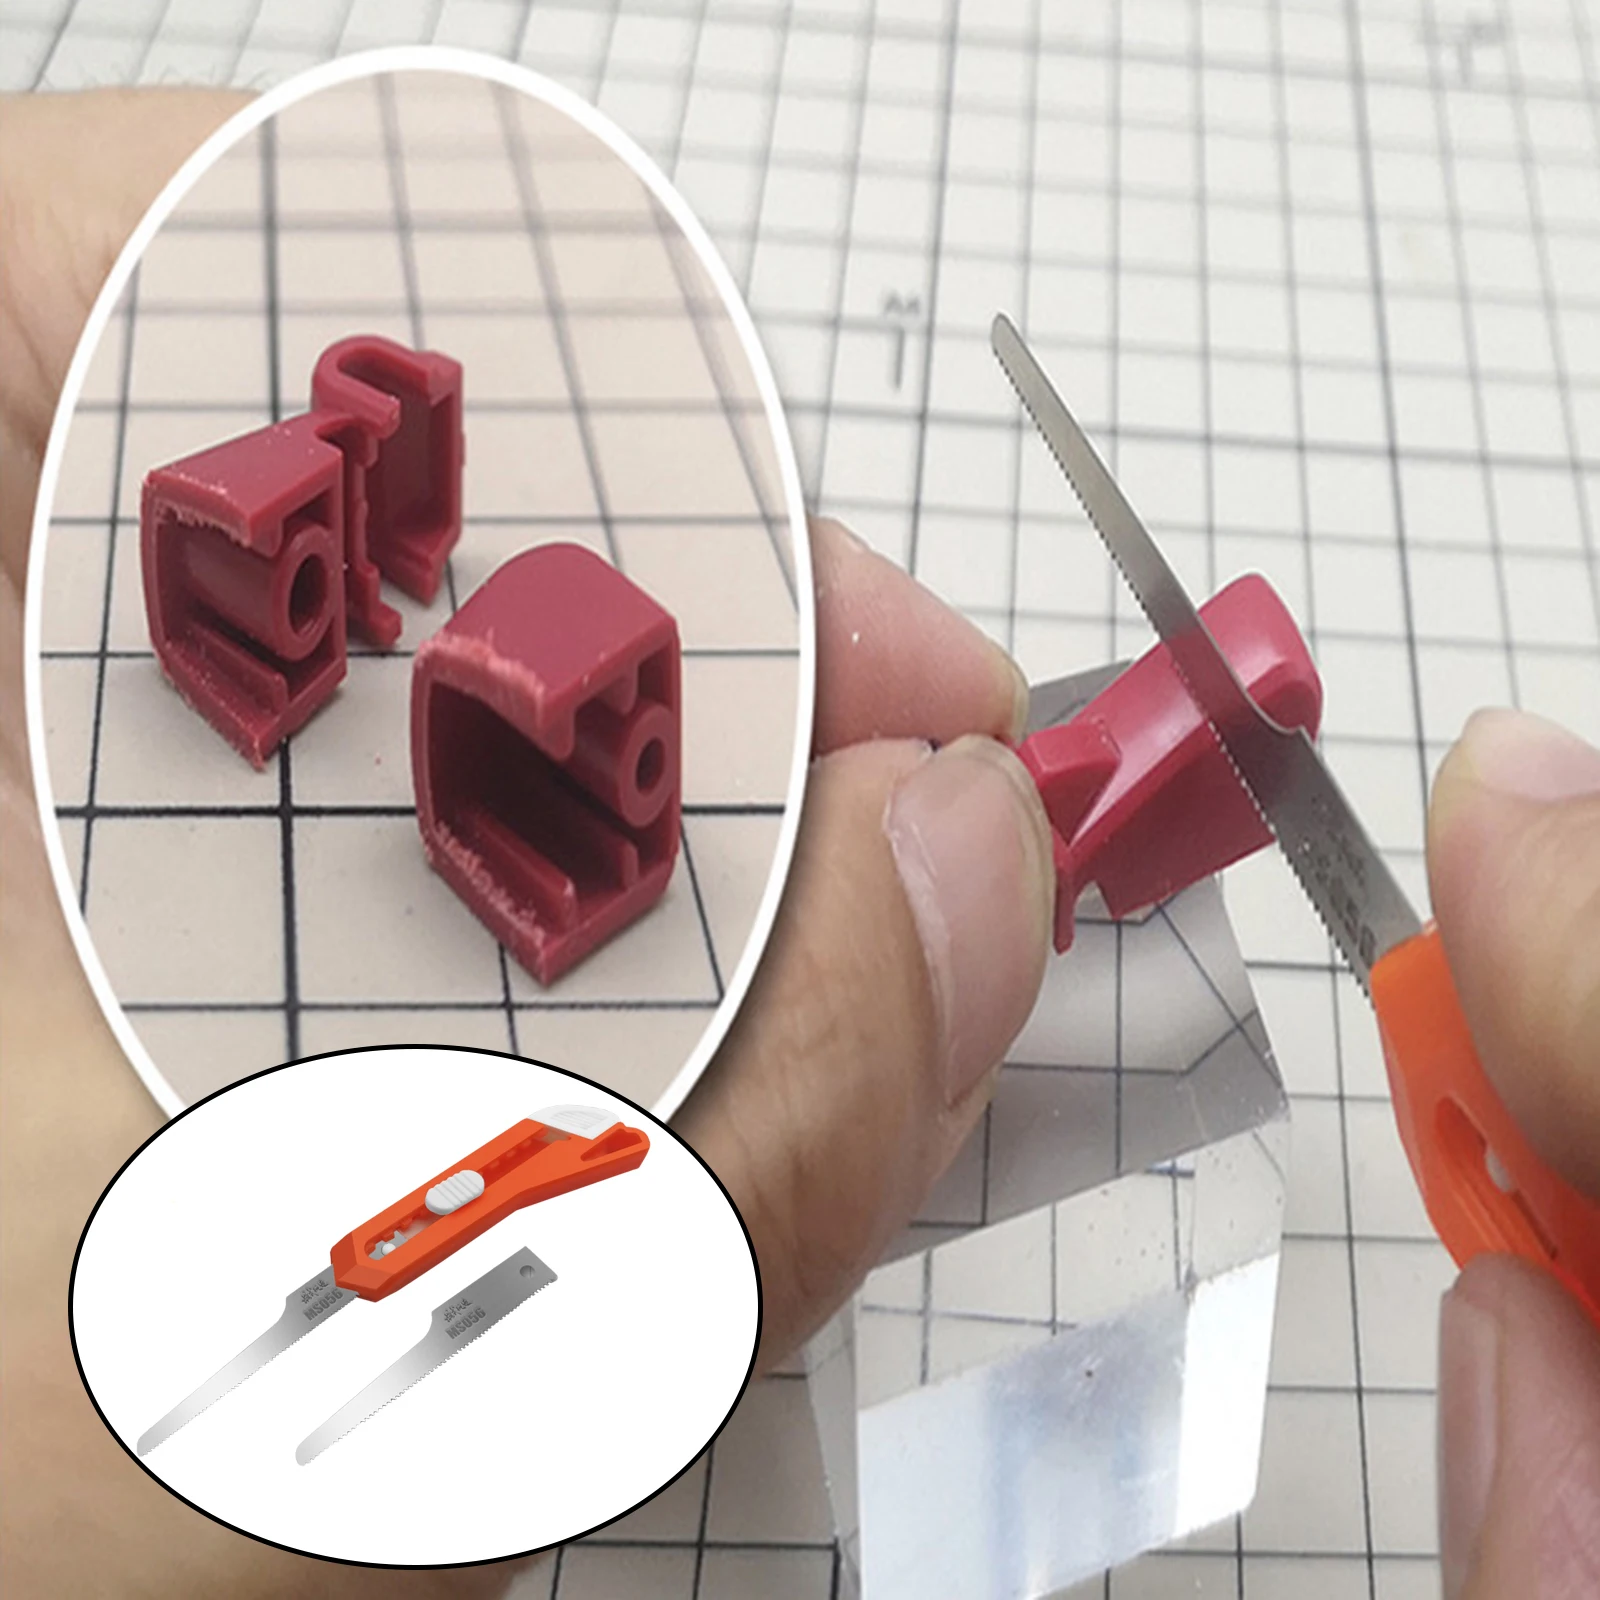 Multifunction Hobby Model Mini Hand Saw Knife Blades Cutter Kit 2 in 1 DIY Craft Model Hand Saw Hacksaw